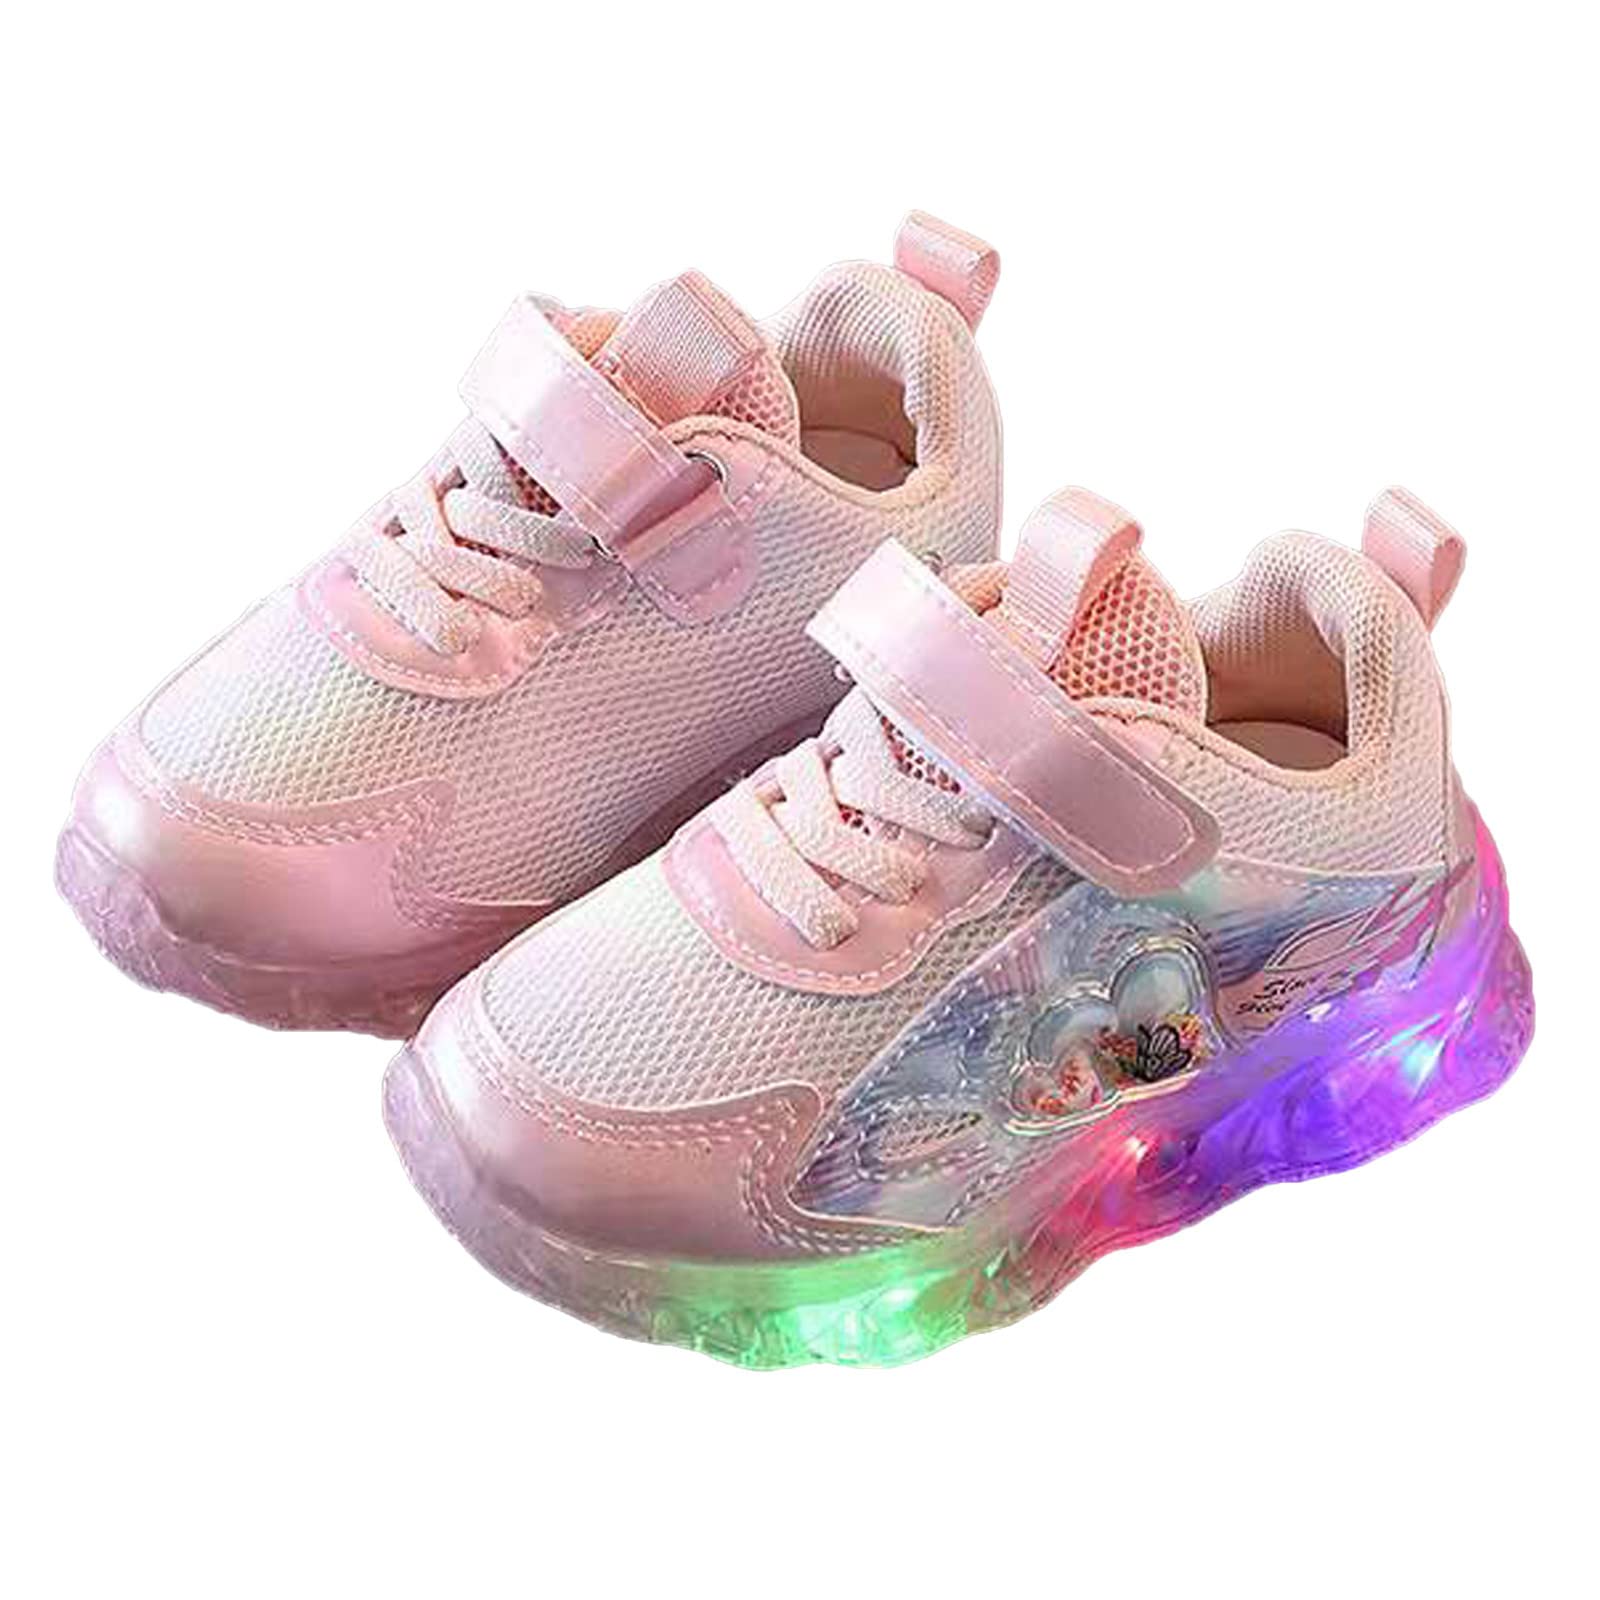 Girls Gyms Shoes Light Up Shoes for Girls Toddler Led Walking Girls Kids Children Toddler Shoes Size 5 Girls